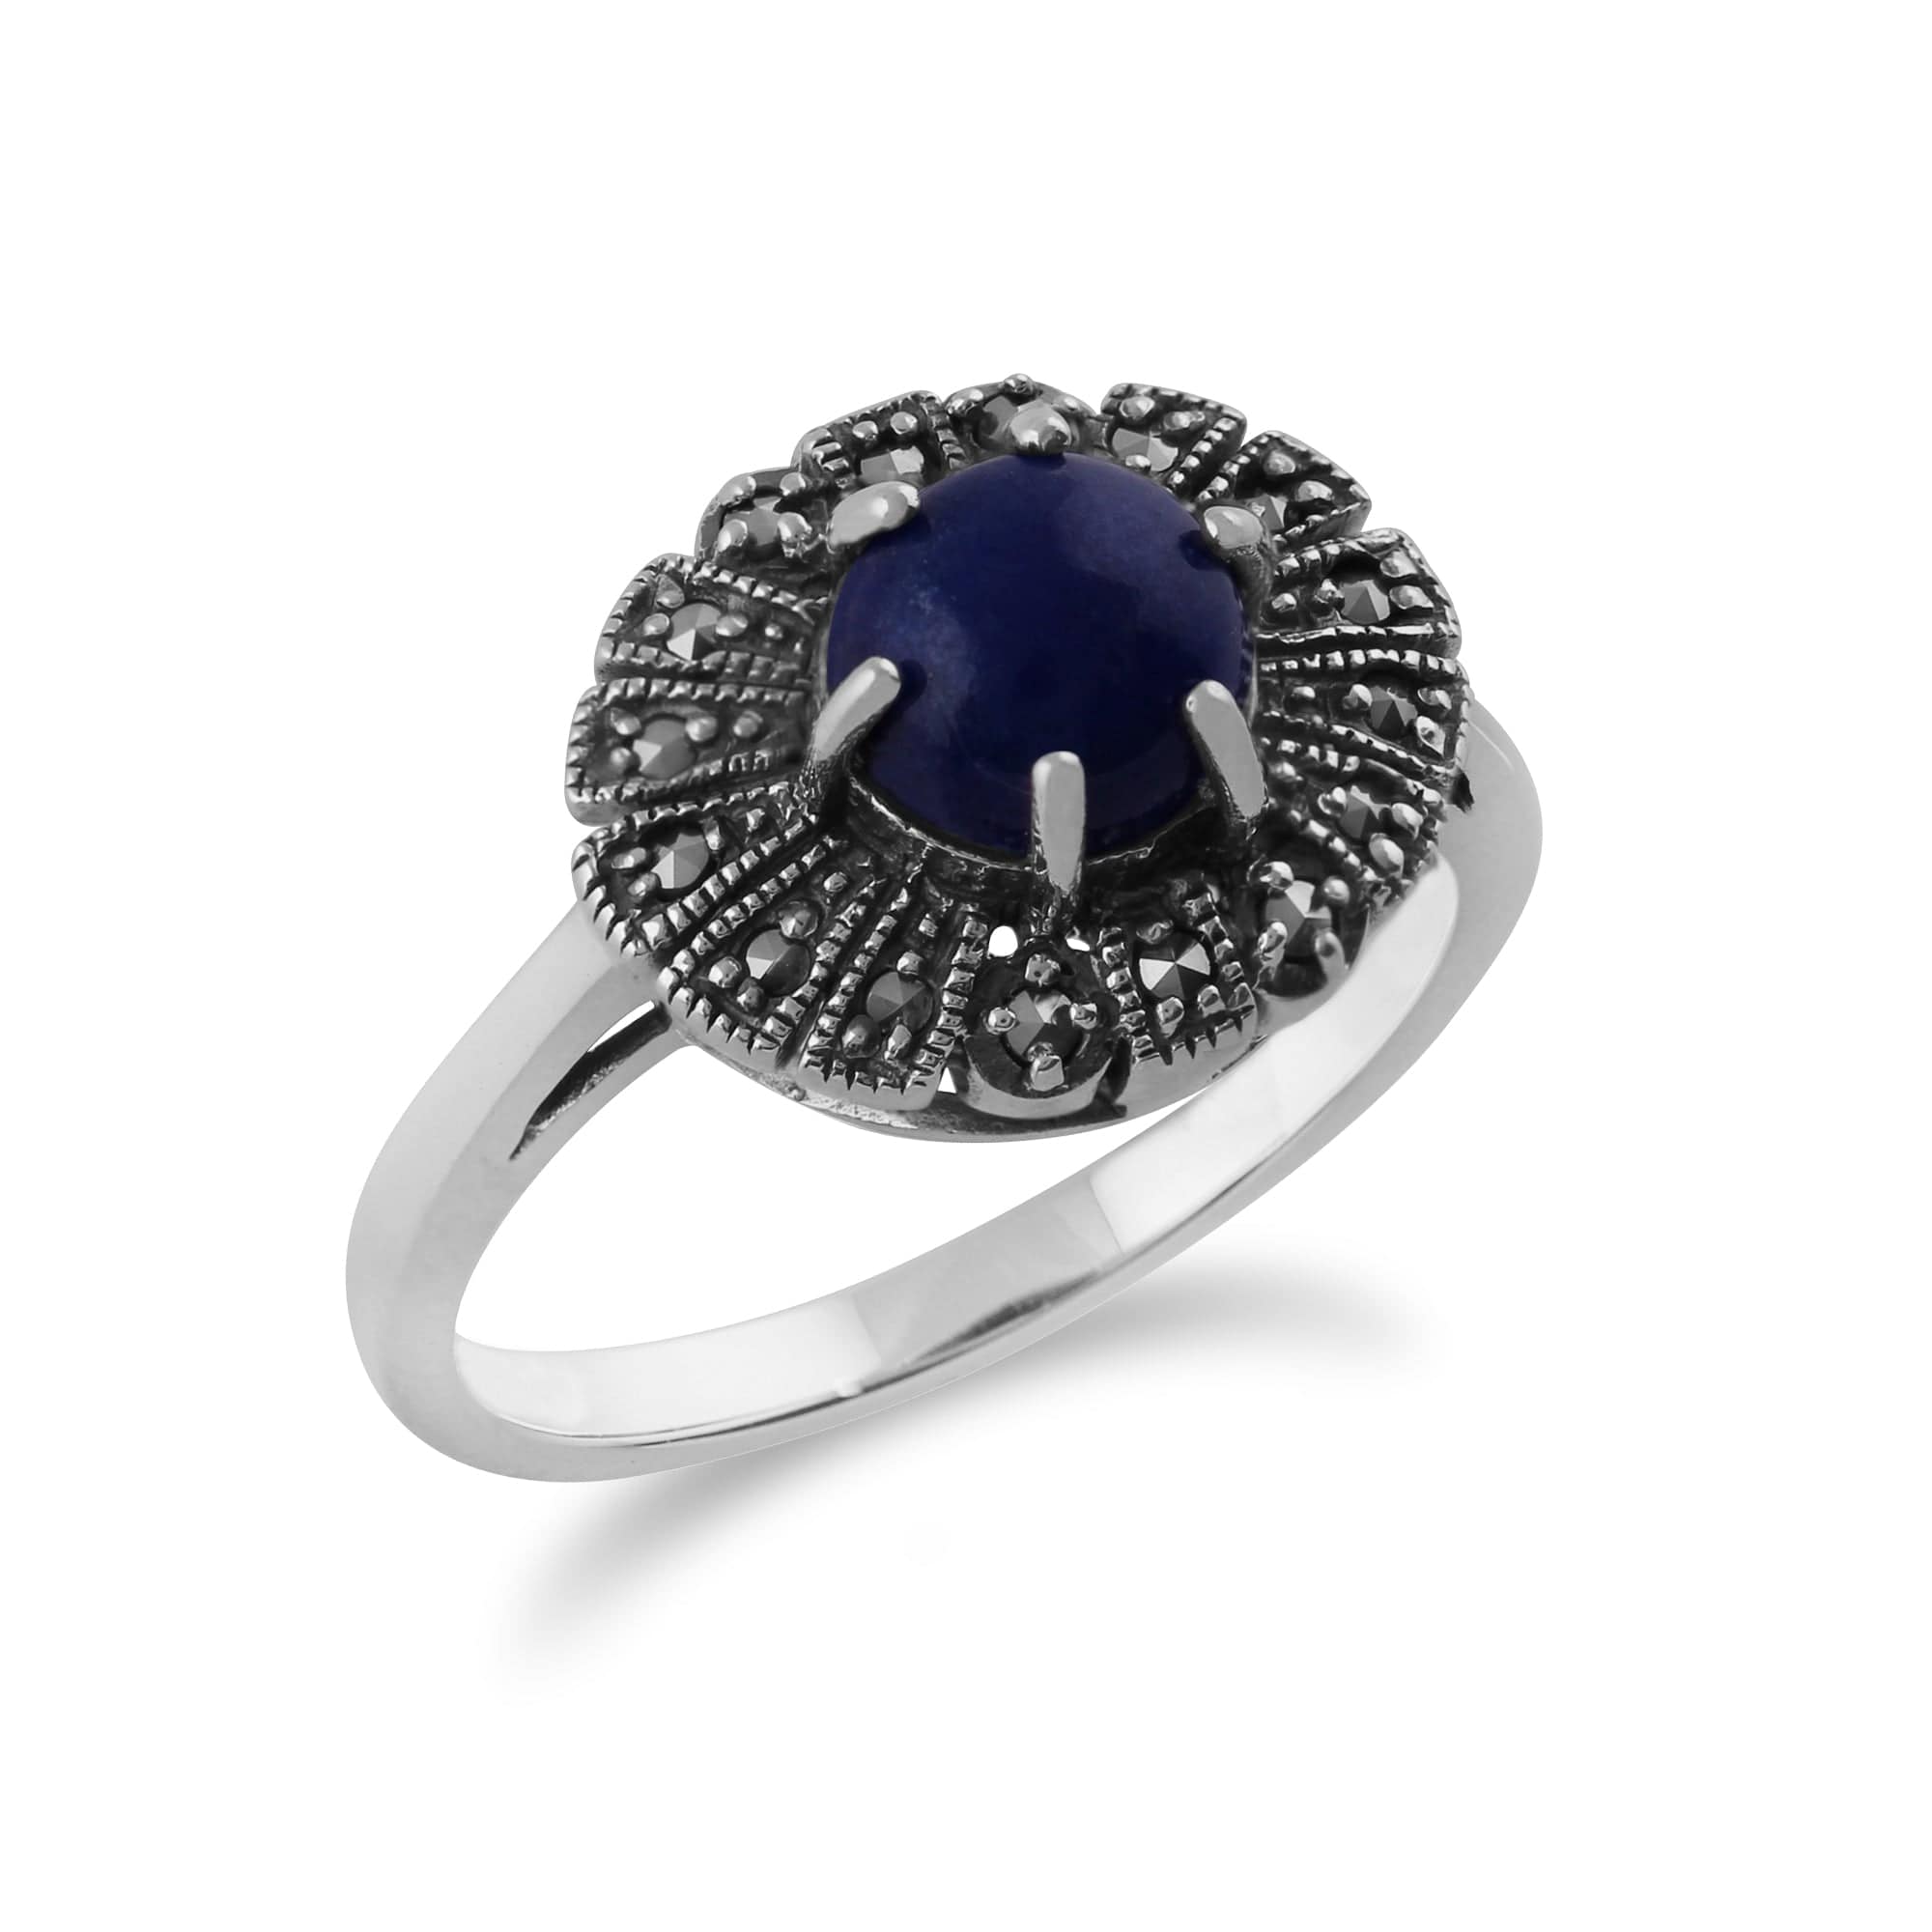 Gemondo 925 Sterling Silver 0.62ct Lapis Lazuli & Marcasite Art Deco Ring Image 2